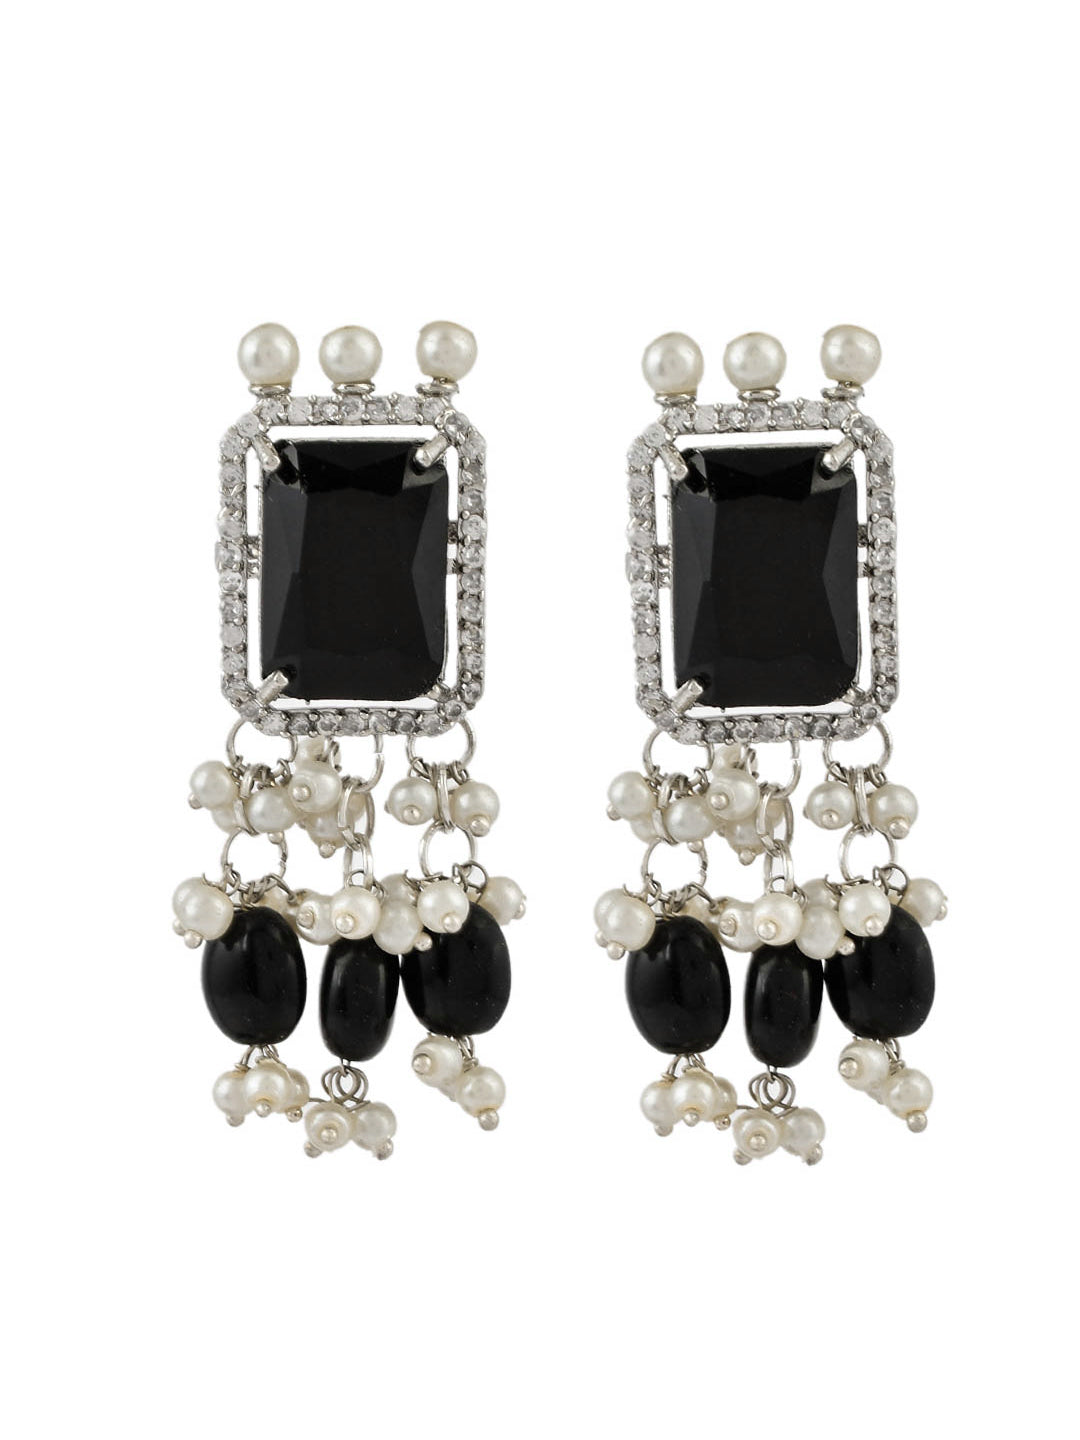 Black Onyx And Pearl Choker Jewellery Set For Wedding